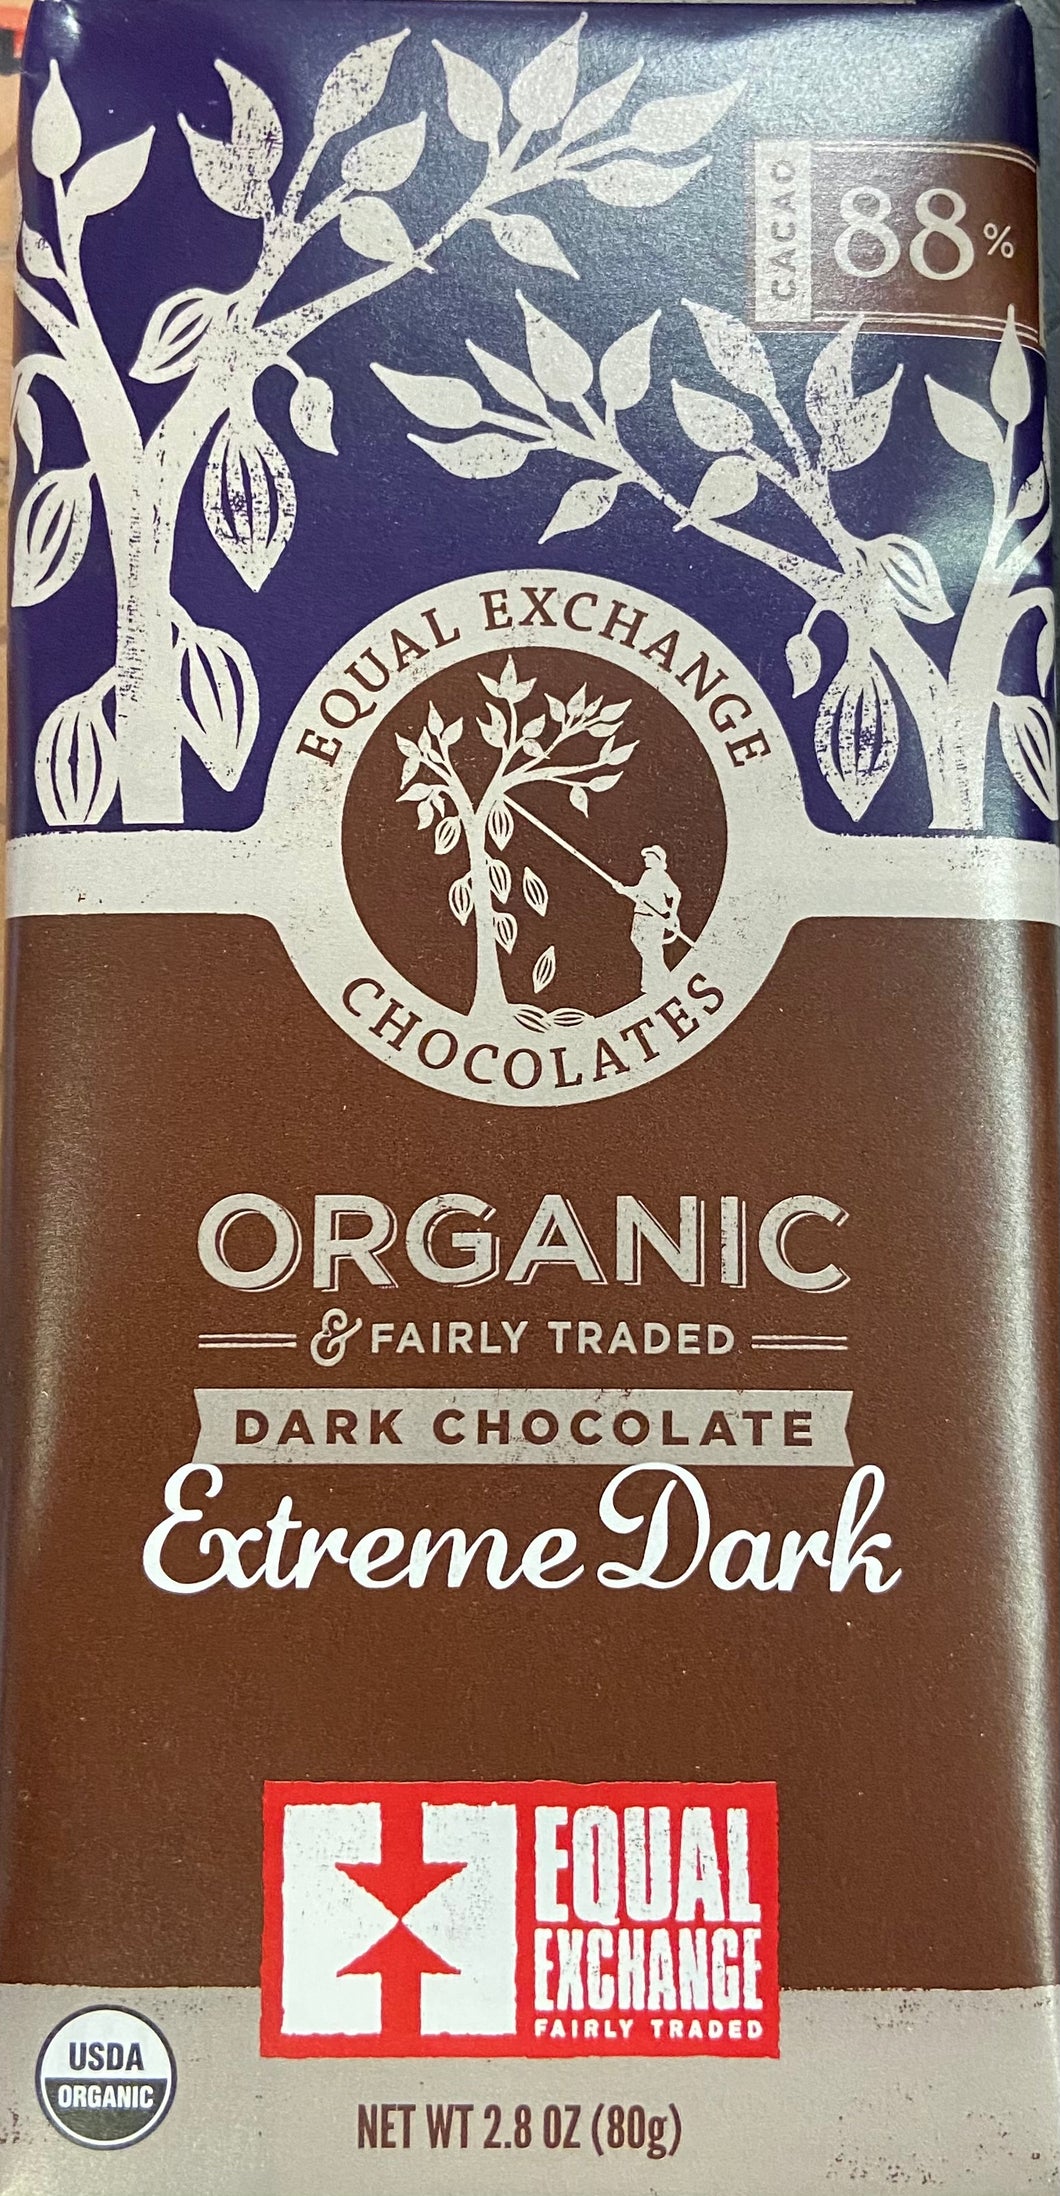 Chocolate Bar, Dark Extreme Dark, Organic 88% Cacao, Equal Exchange